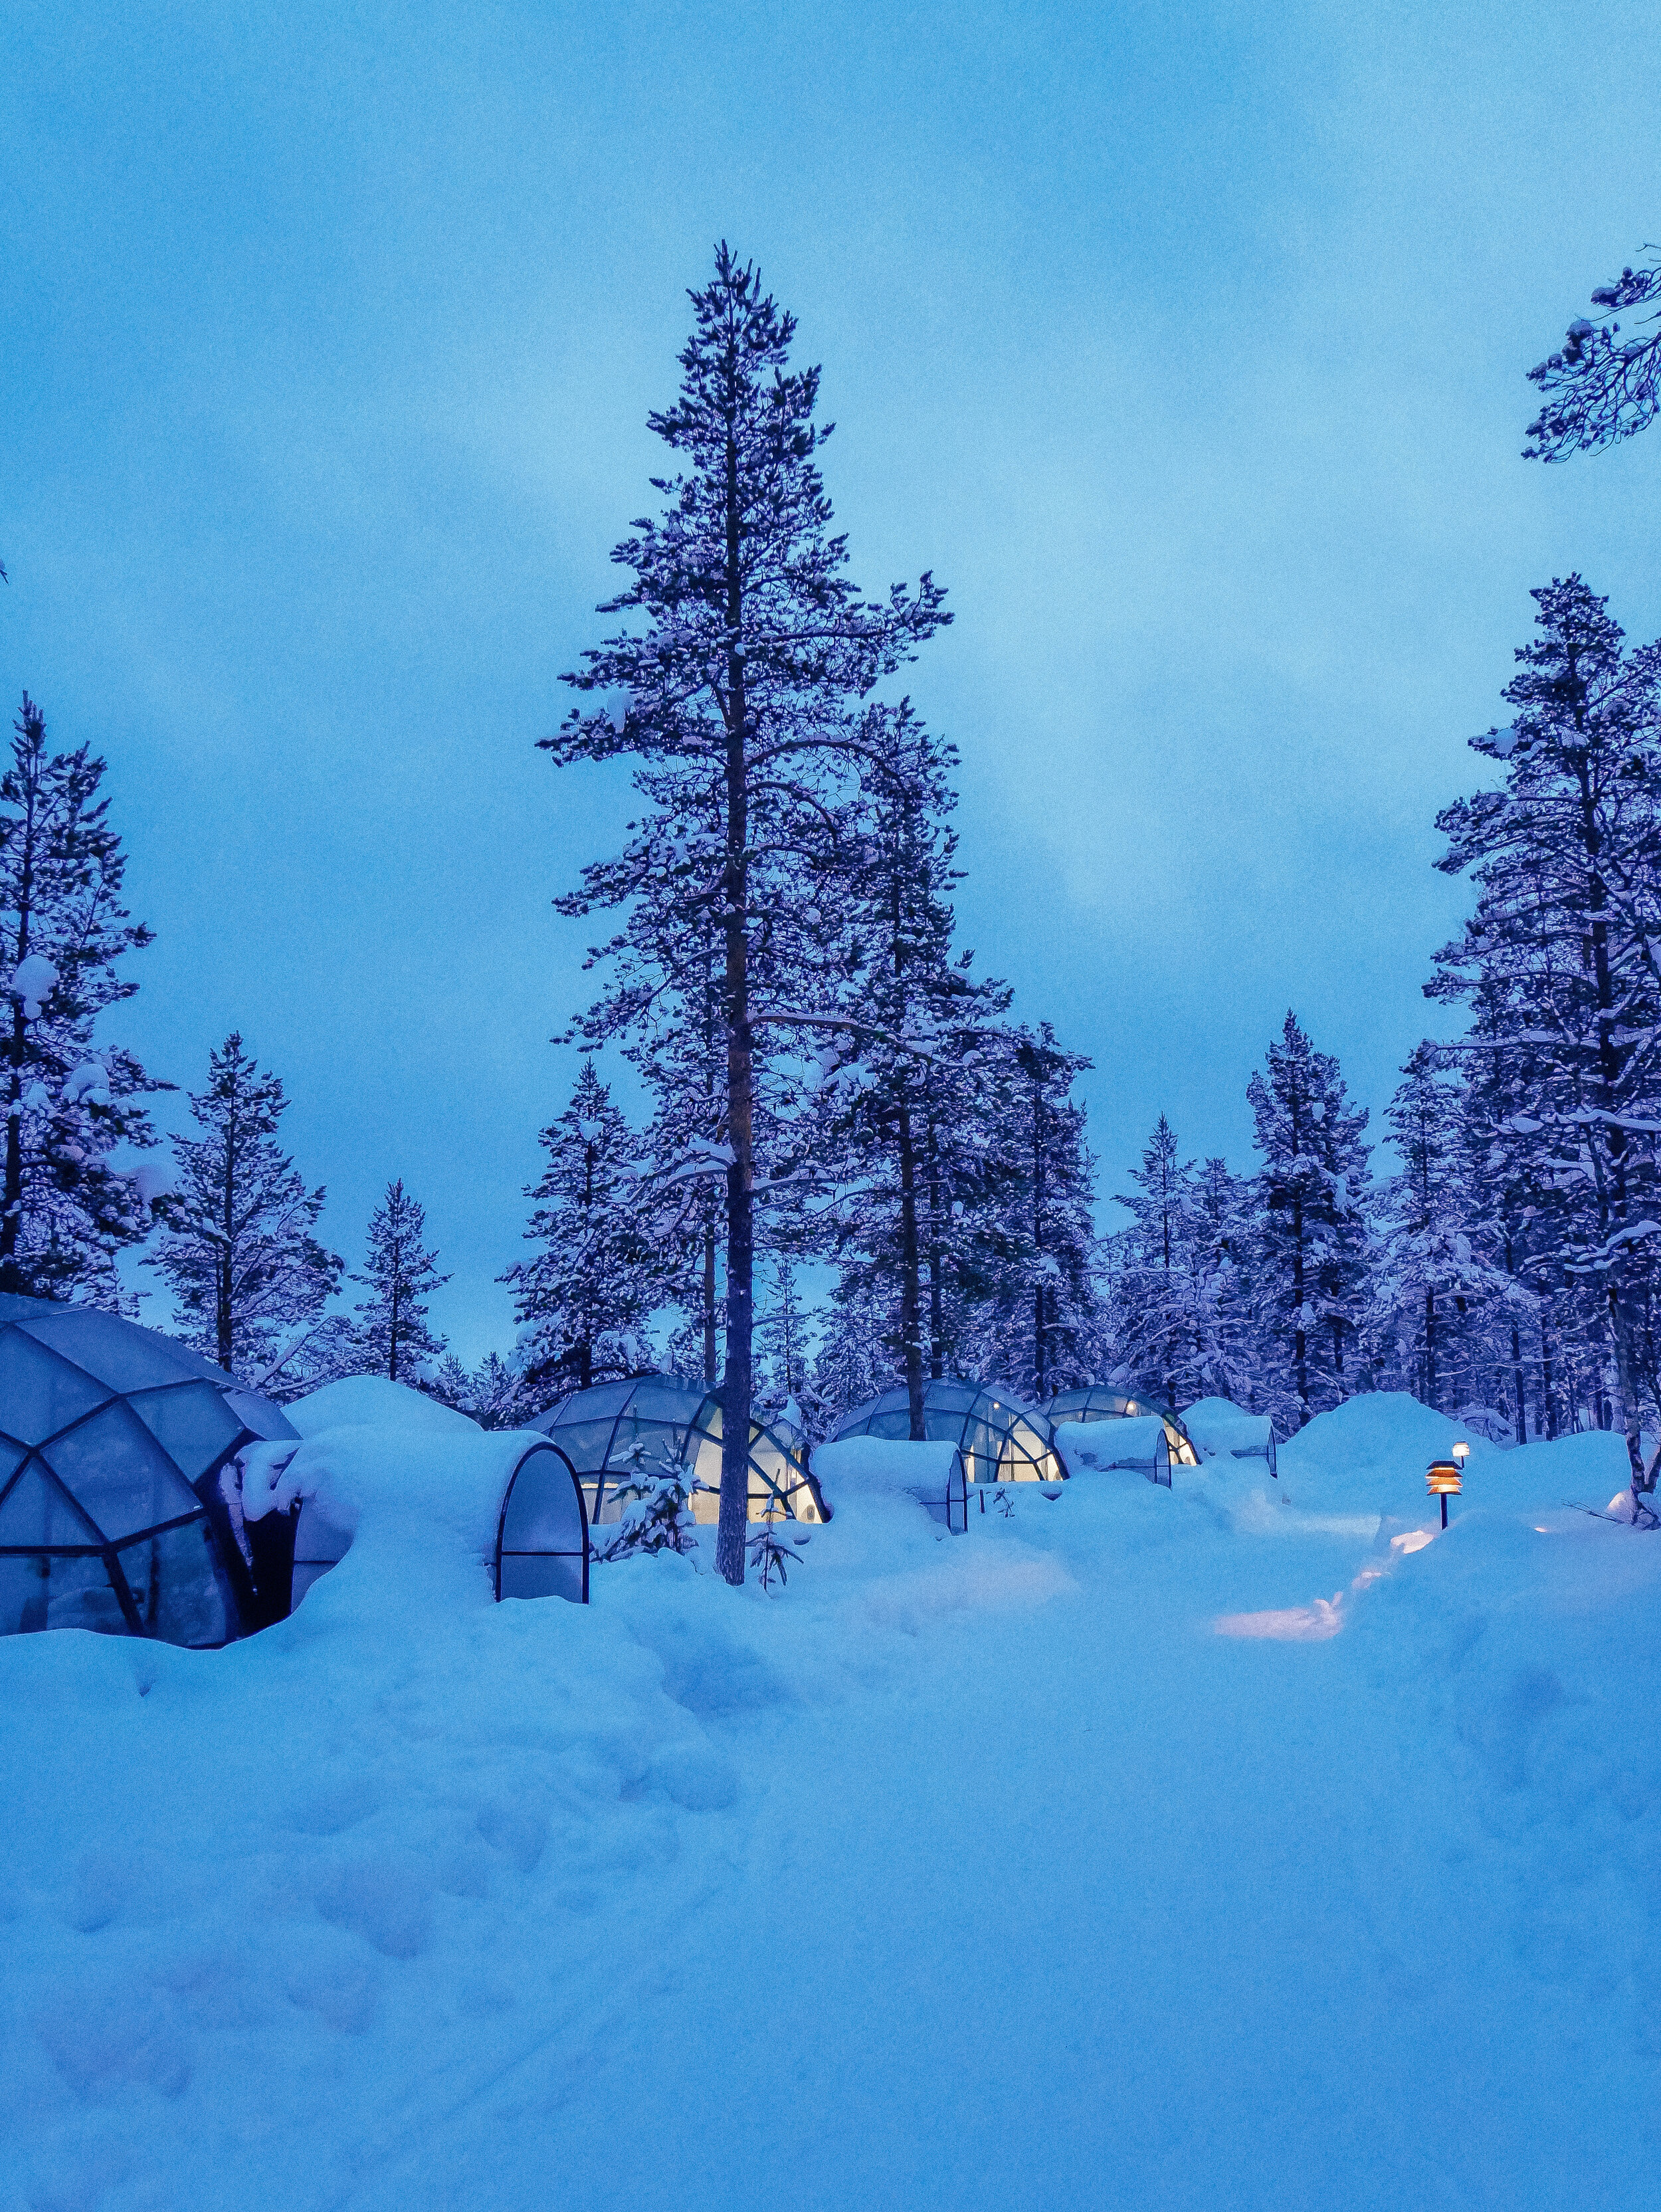 Kakslauttanen Arctic Resort - Glass Igloo and Trees - Lapland - Finland